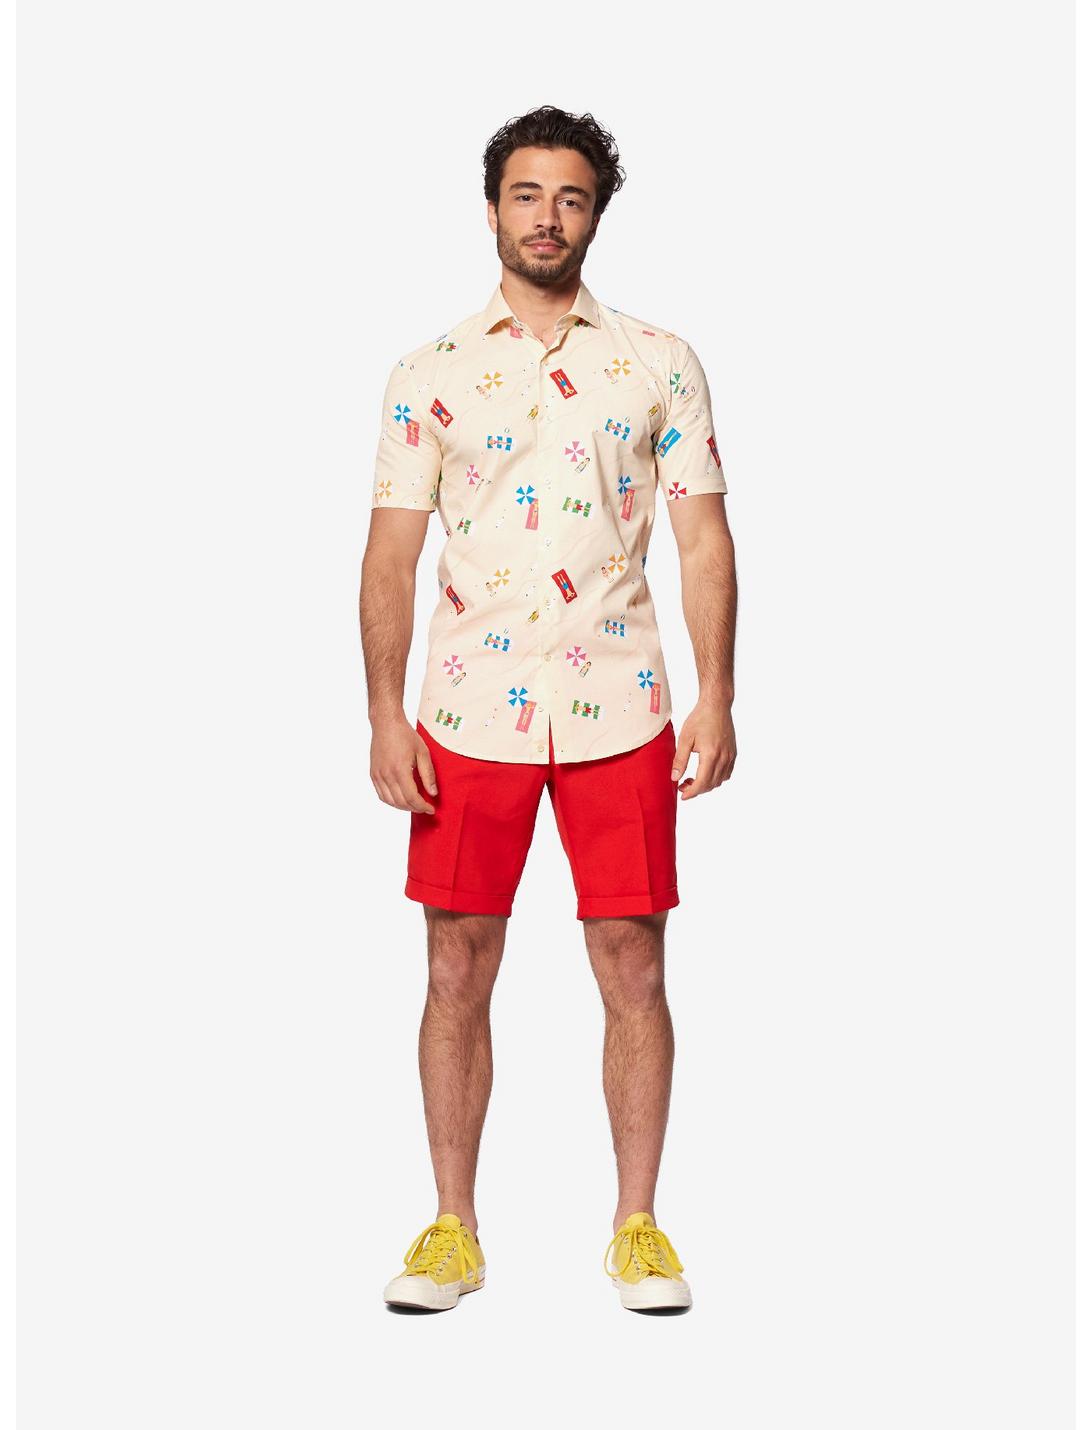 Opposuits Men's Beach Life Sand Summer Shirt, SAND, hi-res